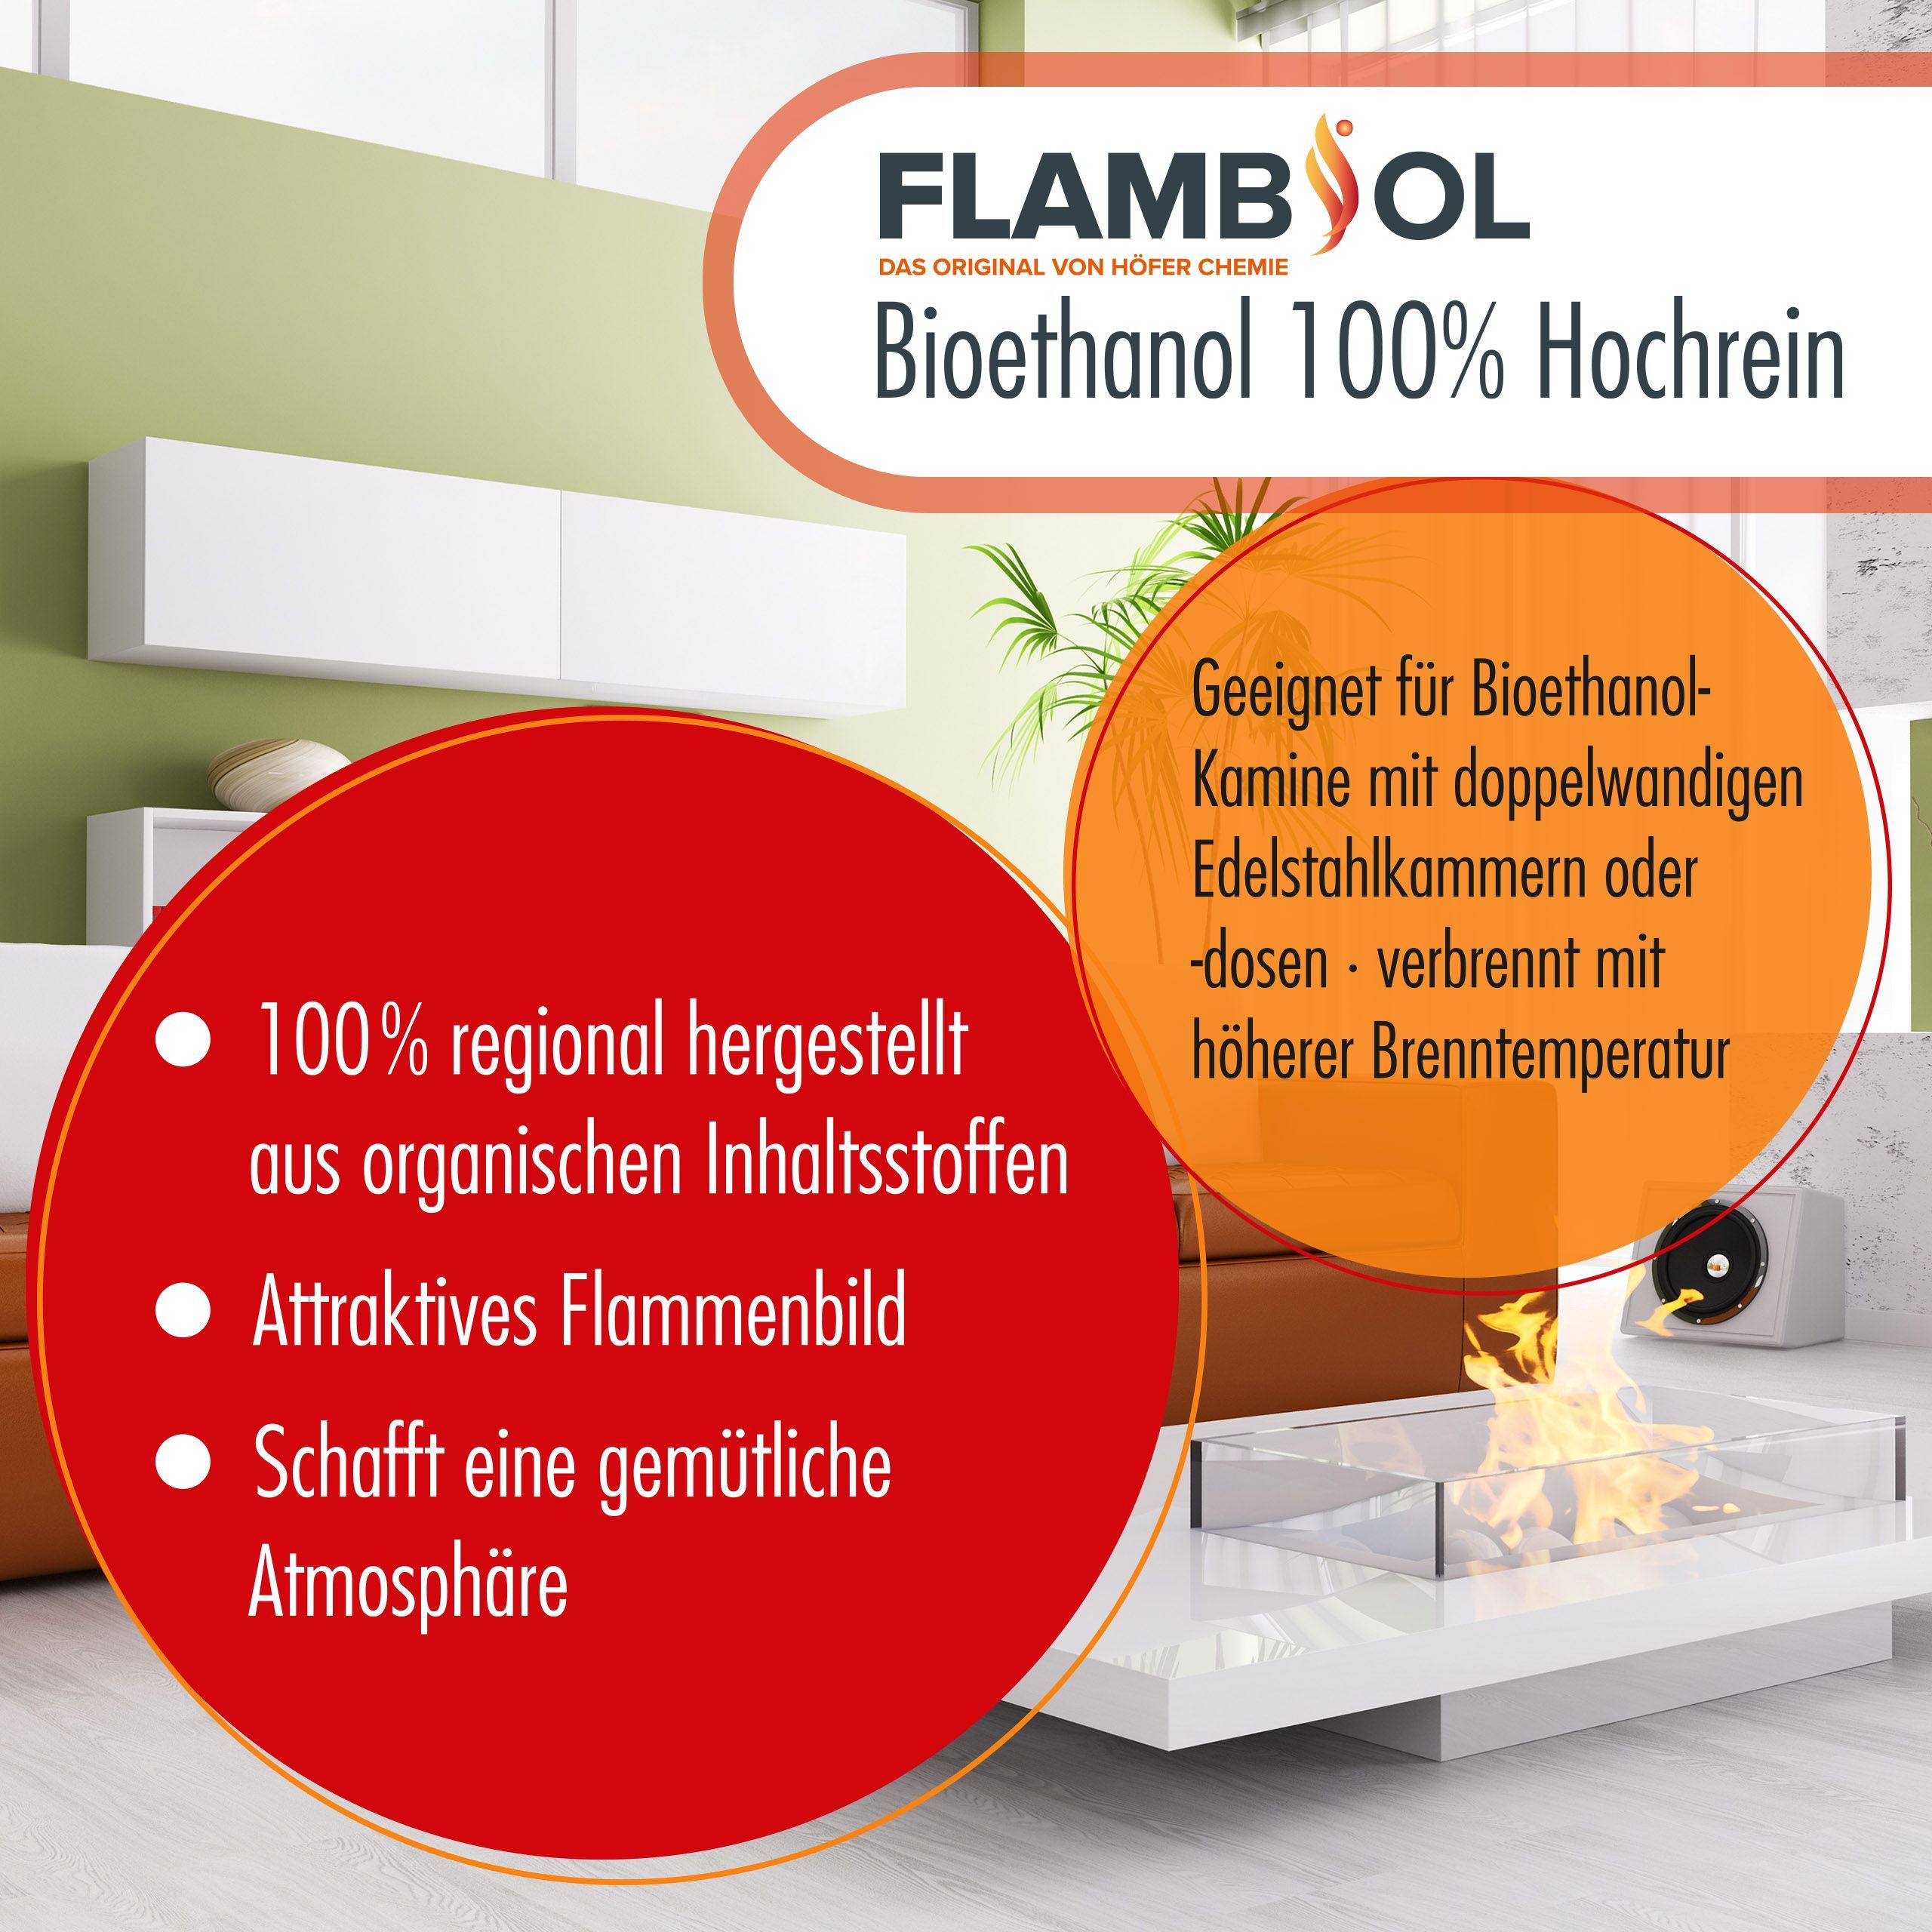 5 L FLAMBIOL® Bioéthanol 100 % Ultra-pur